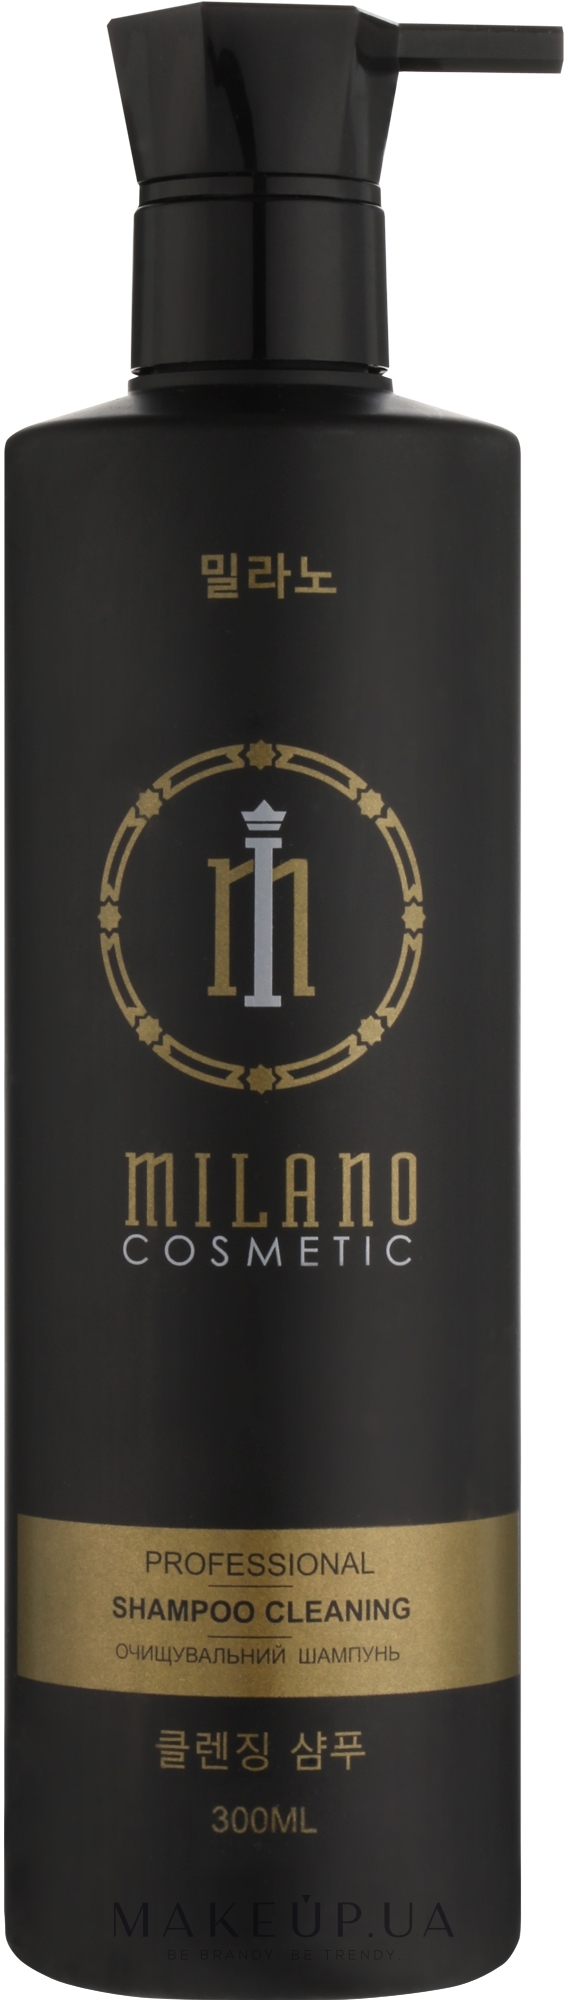 Шампунь для волос очищающий - Milano Cosmetic Professional Shampoo Cleaning — фото 300ml